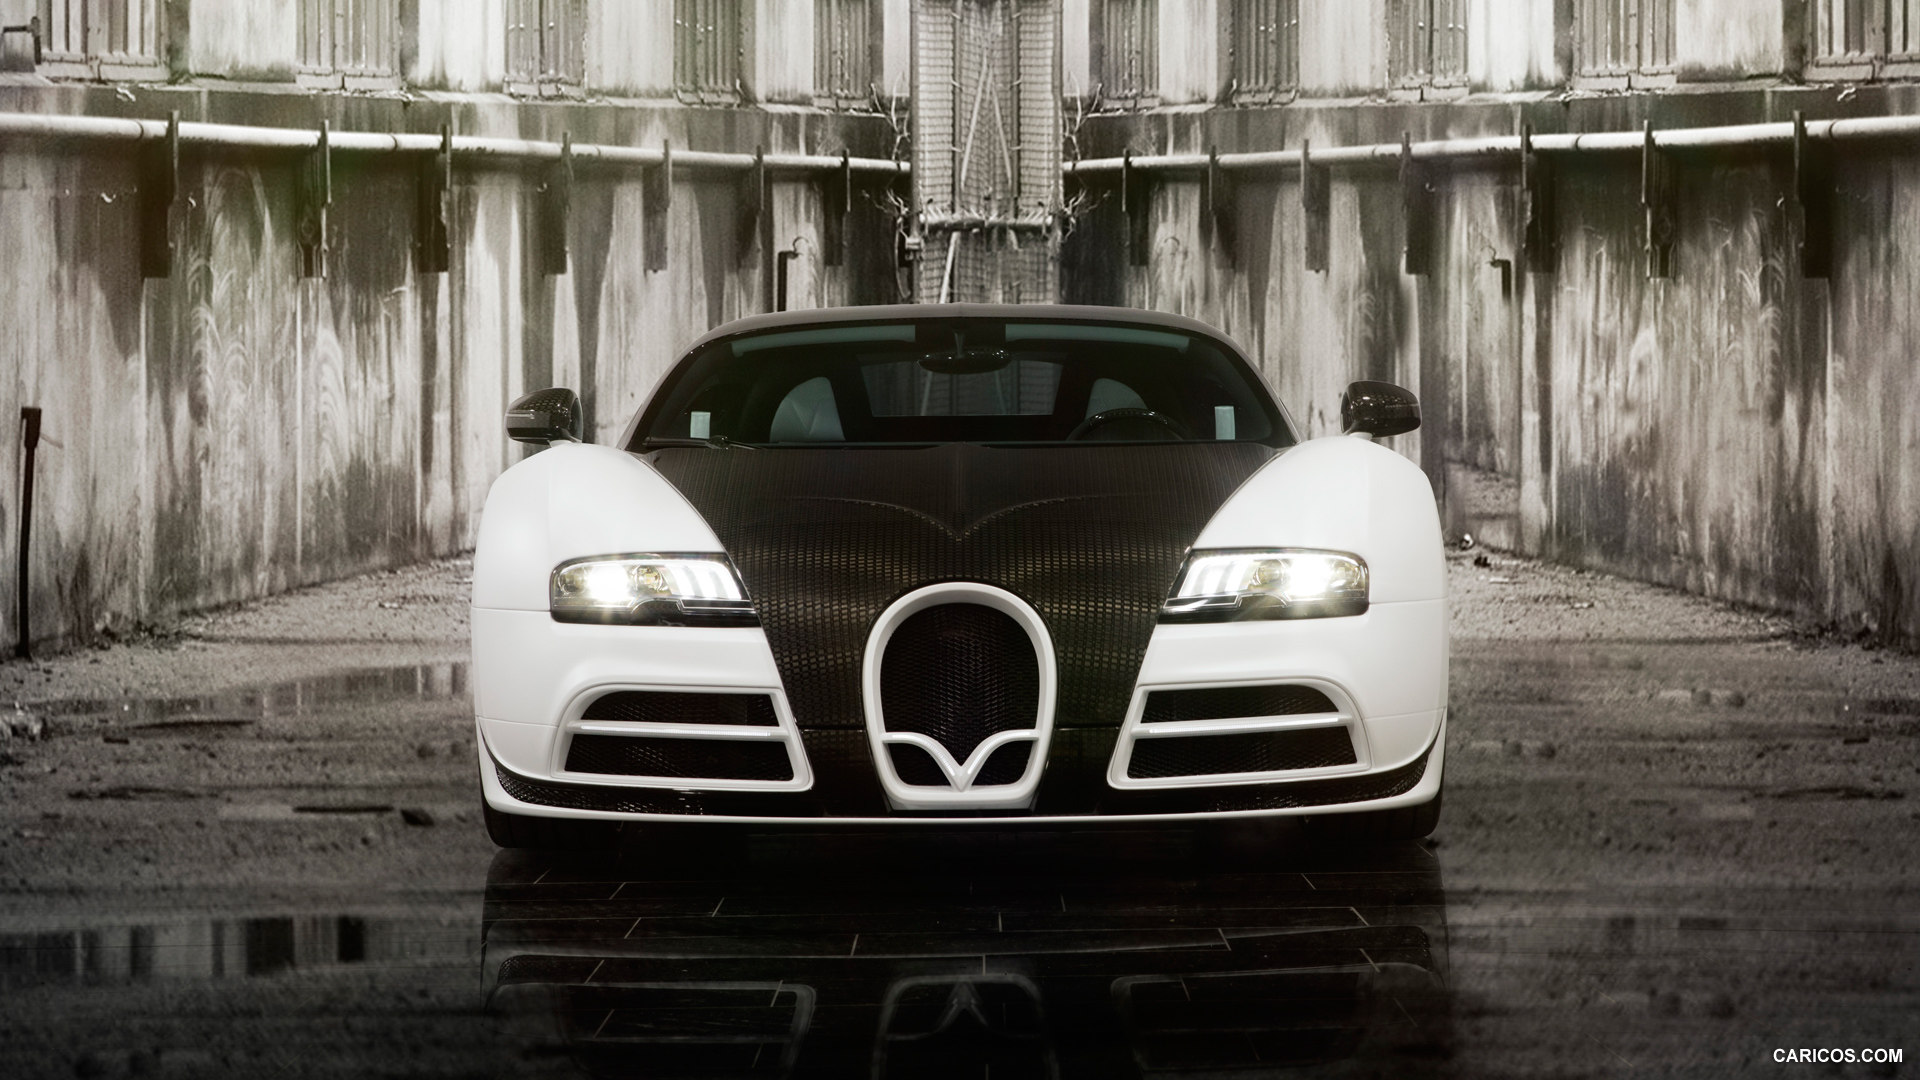 2014 Mansory Vivere based on Bugatti Veyron 16.4  - Front, #8 of 8